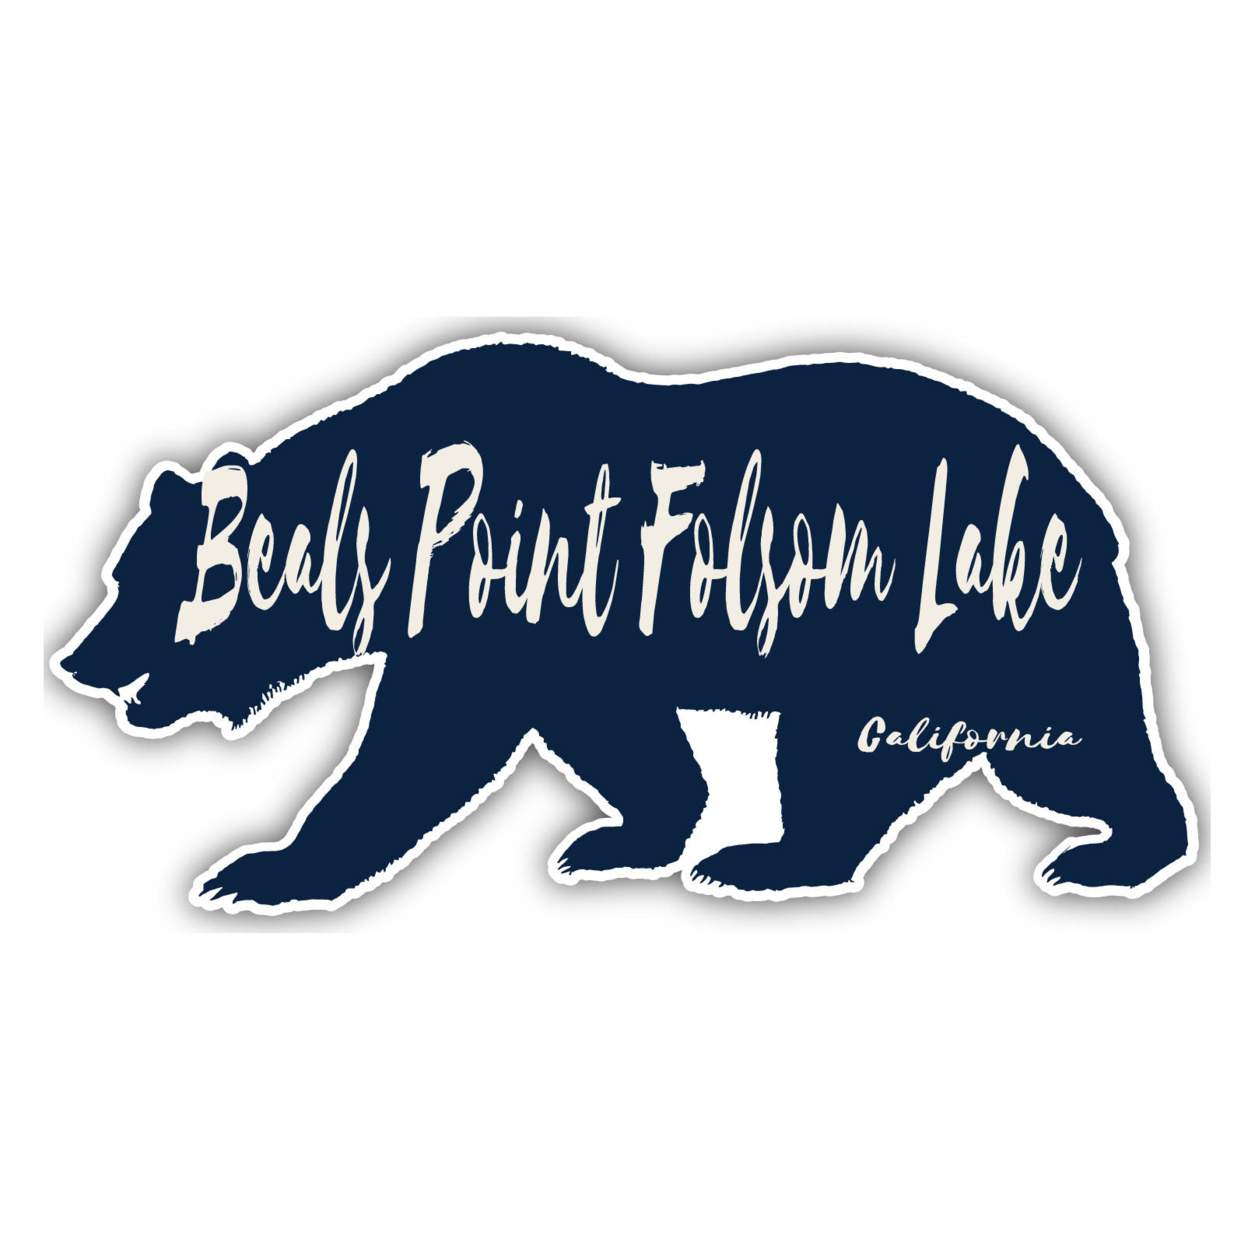 Beals Point Folsom Lake California Souvenir Decorative Stickers (Choose Theme And Size) - Single Unit, 2-Inch, Tent